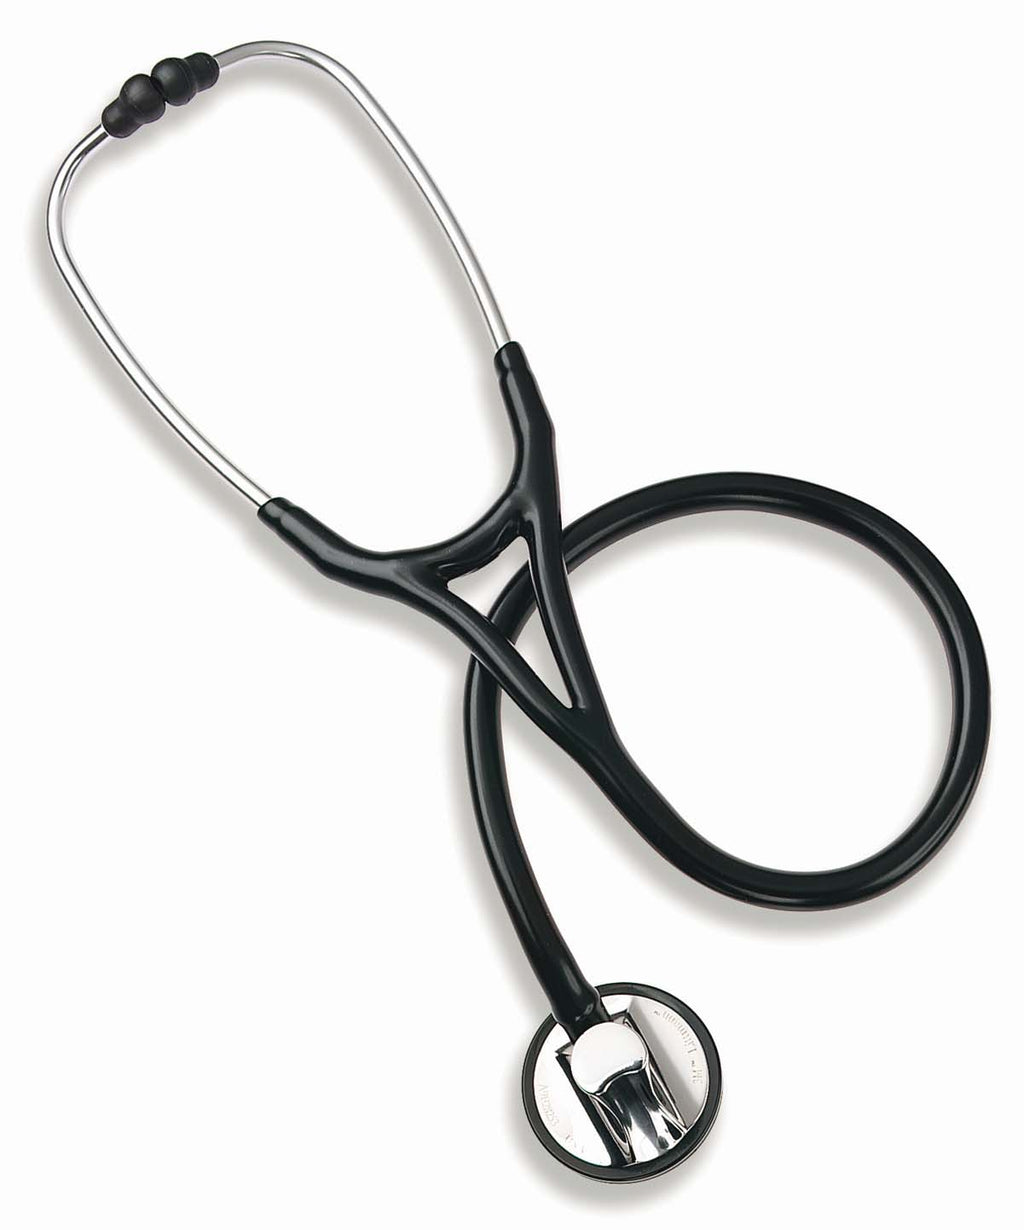 Product - Littmann Master Cardiology Stethoscope - Featured Image